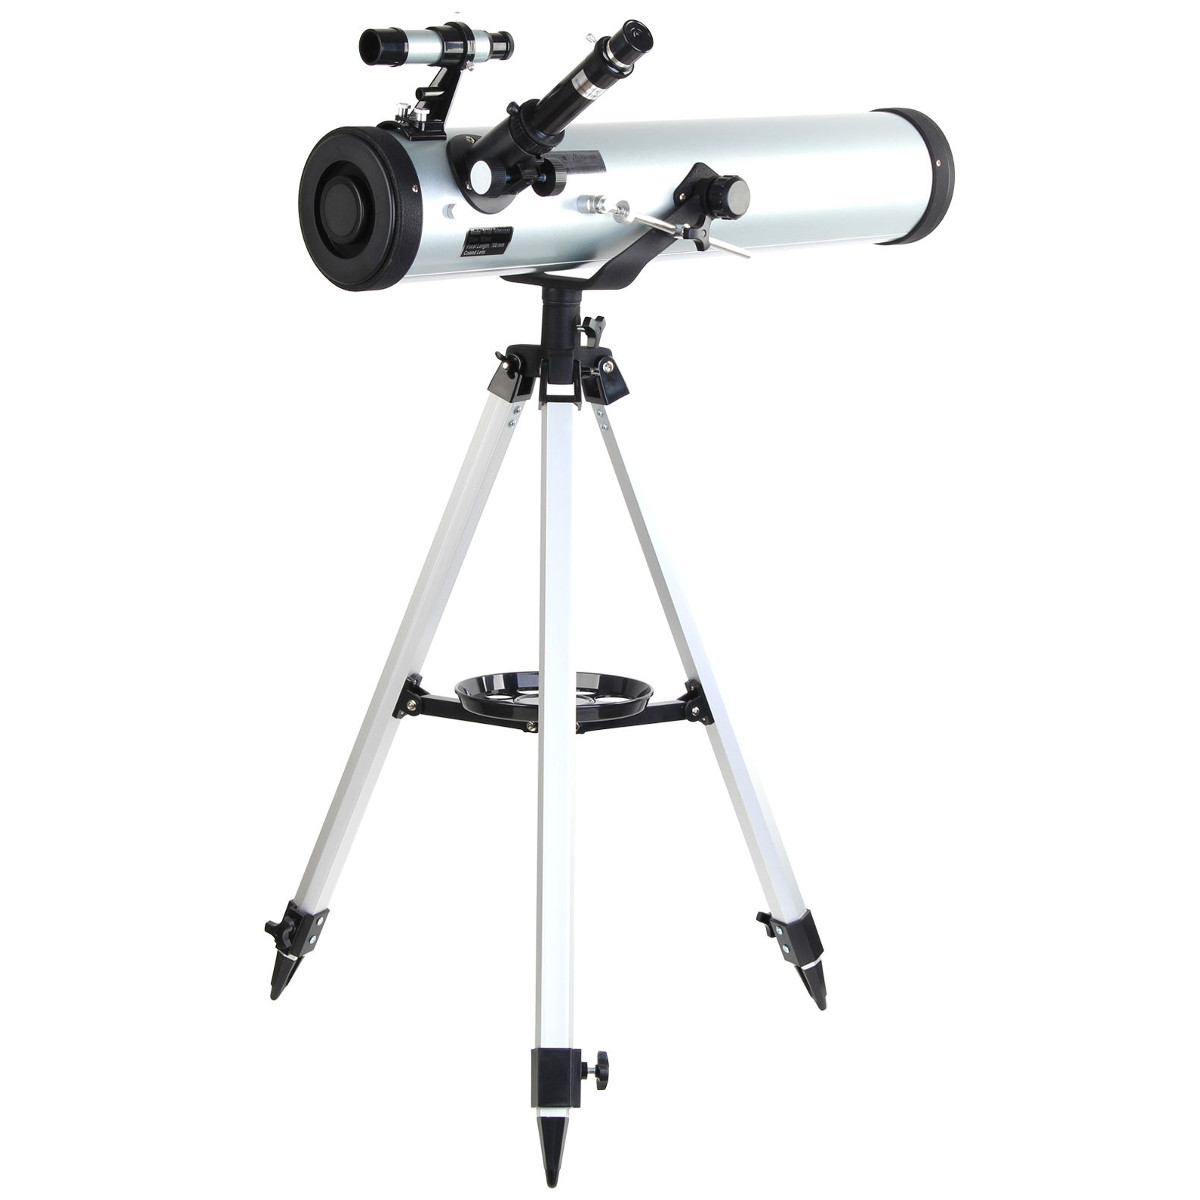 Performance-700-76-Reflector-Astronomical-Telescope-1544502-5